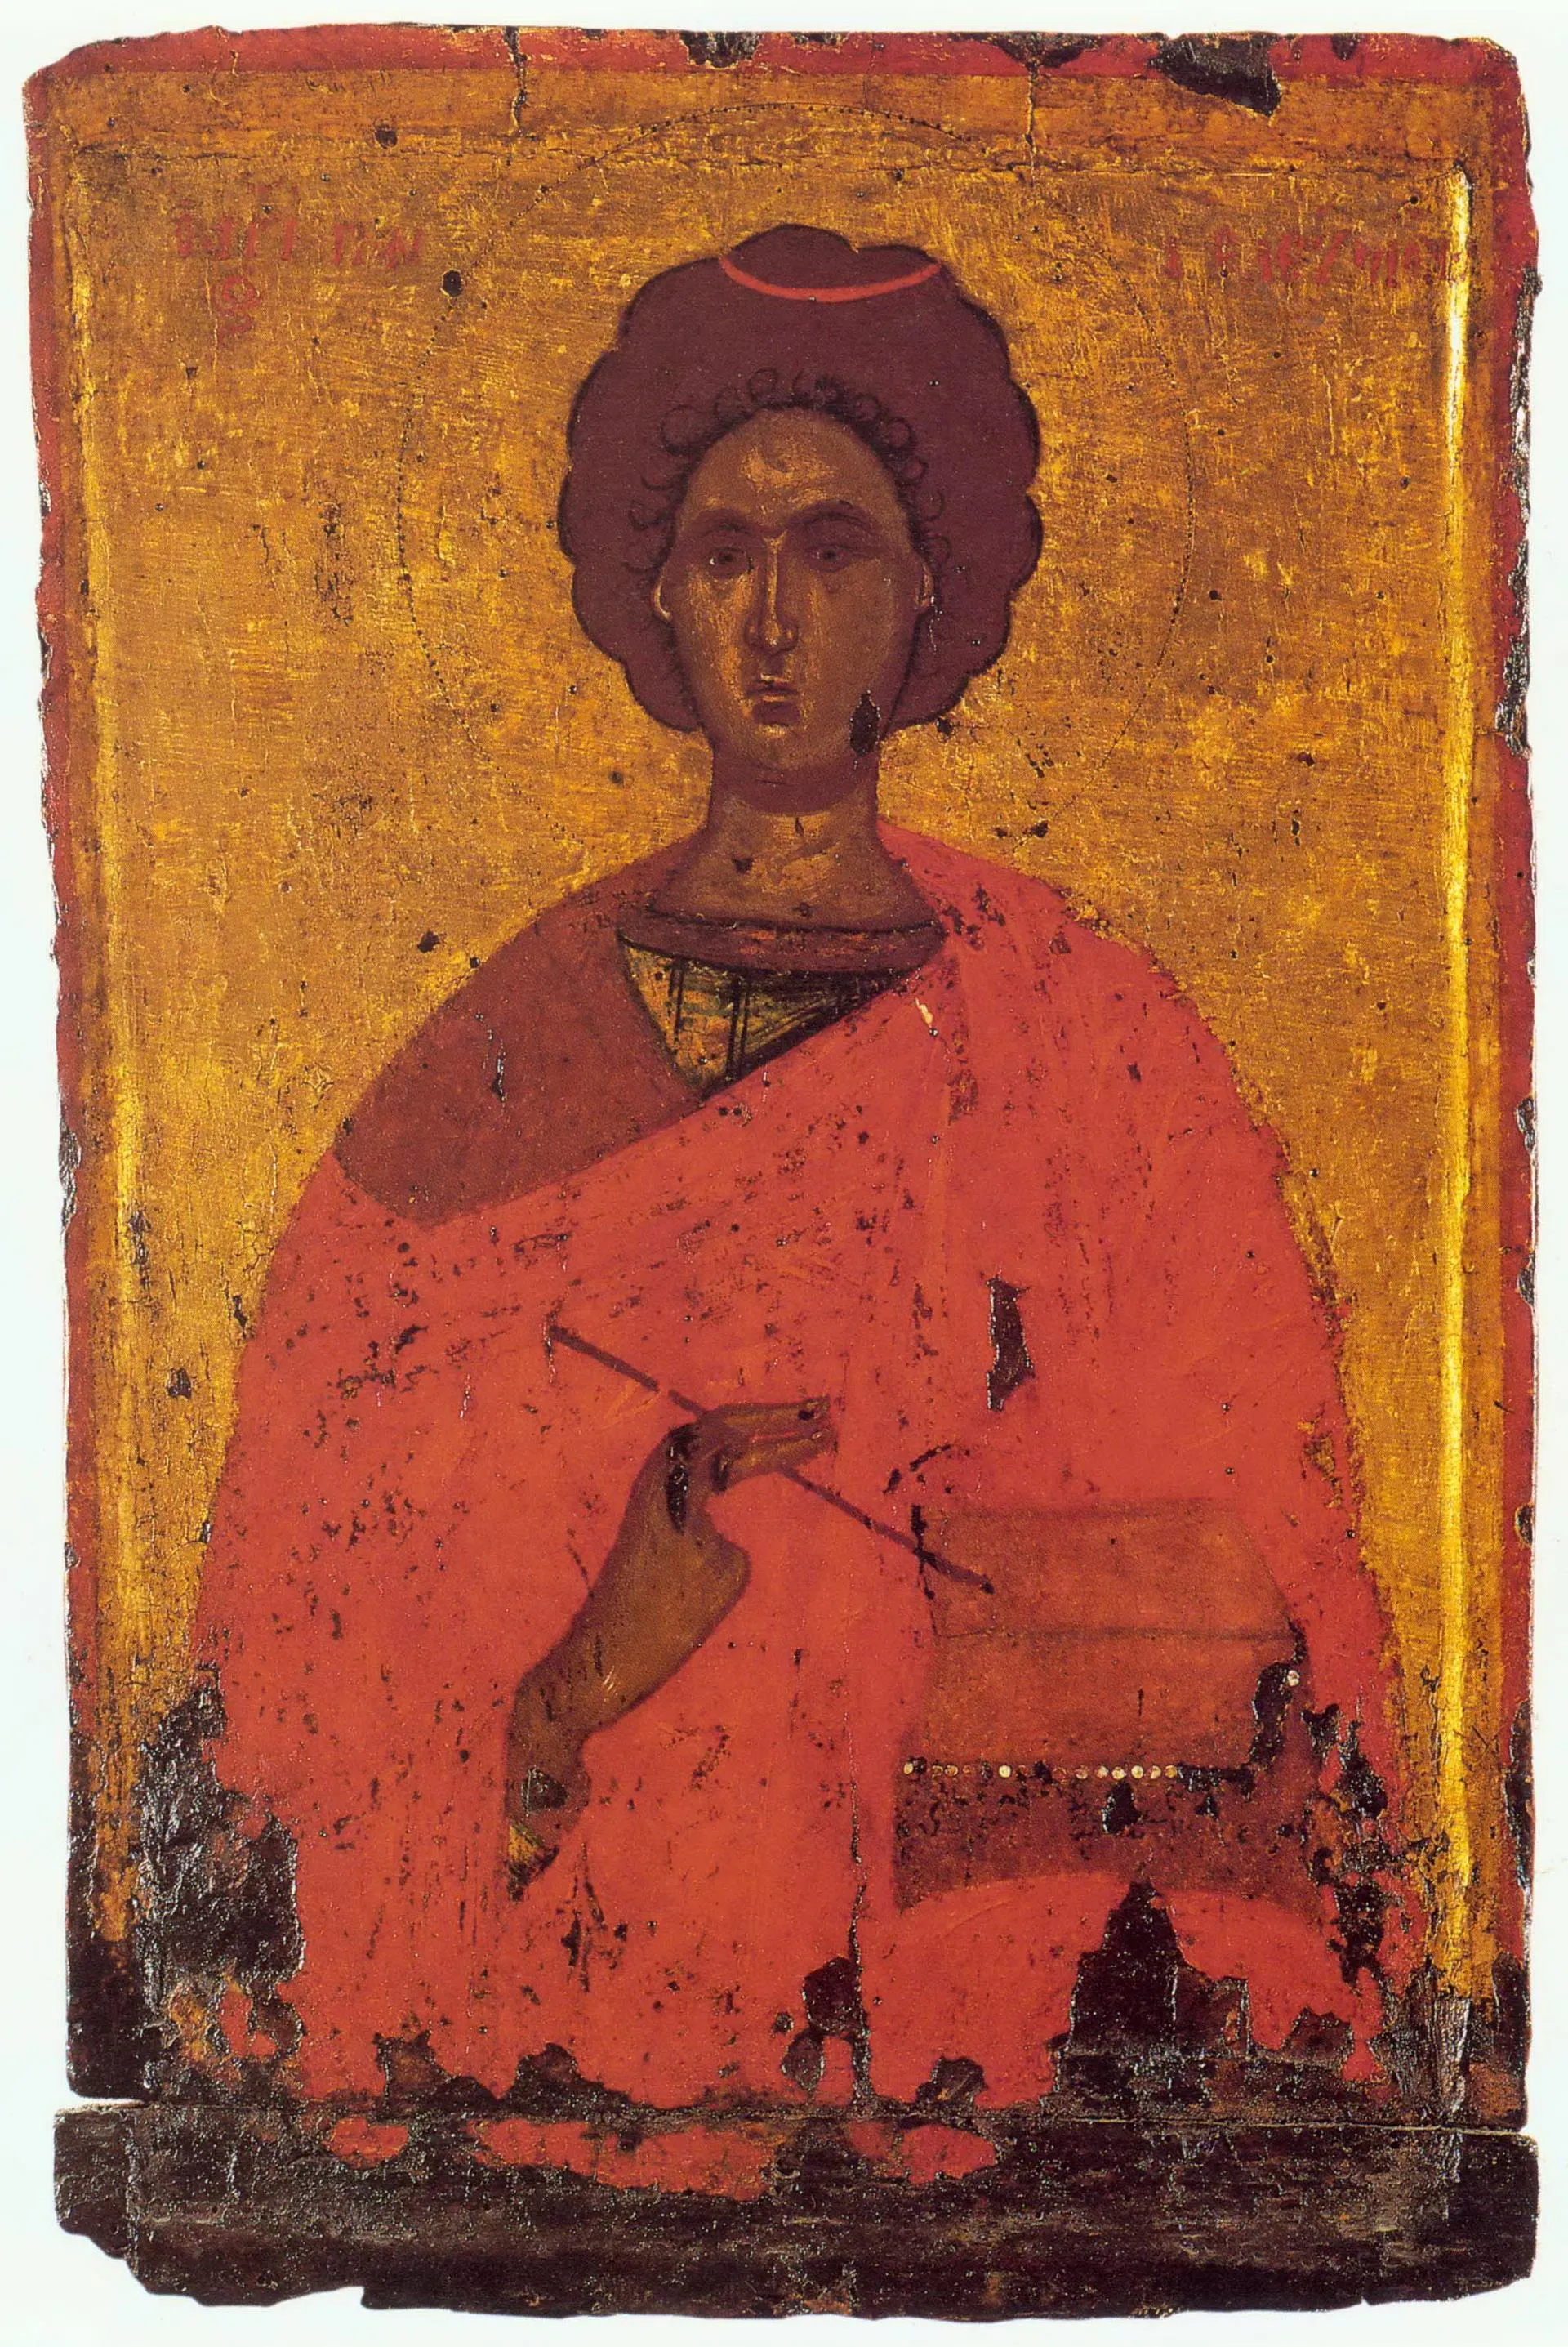 Неизвестный византийский художник (395-1453 гг.)Public domain image. Official museum page, CC BY-SA 3.0